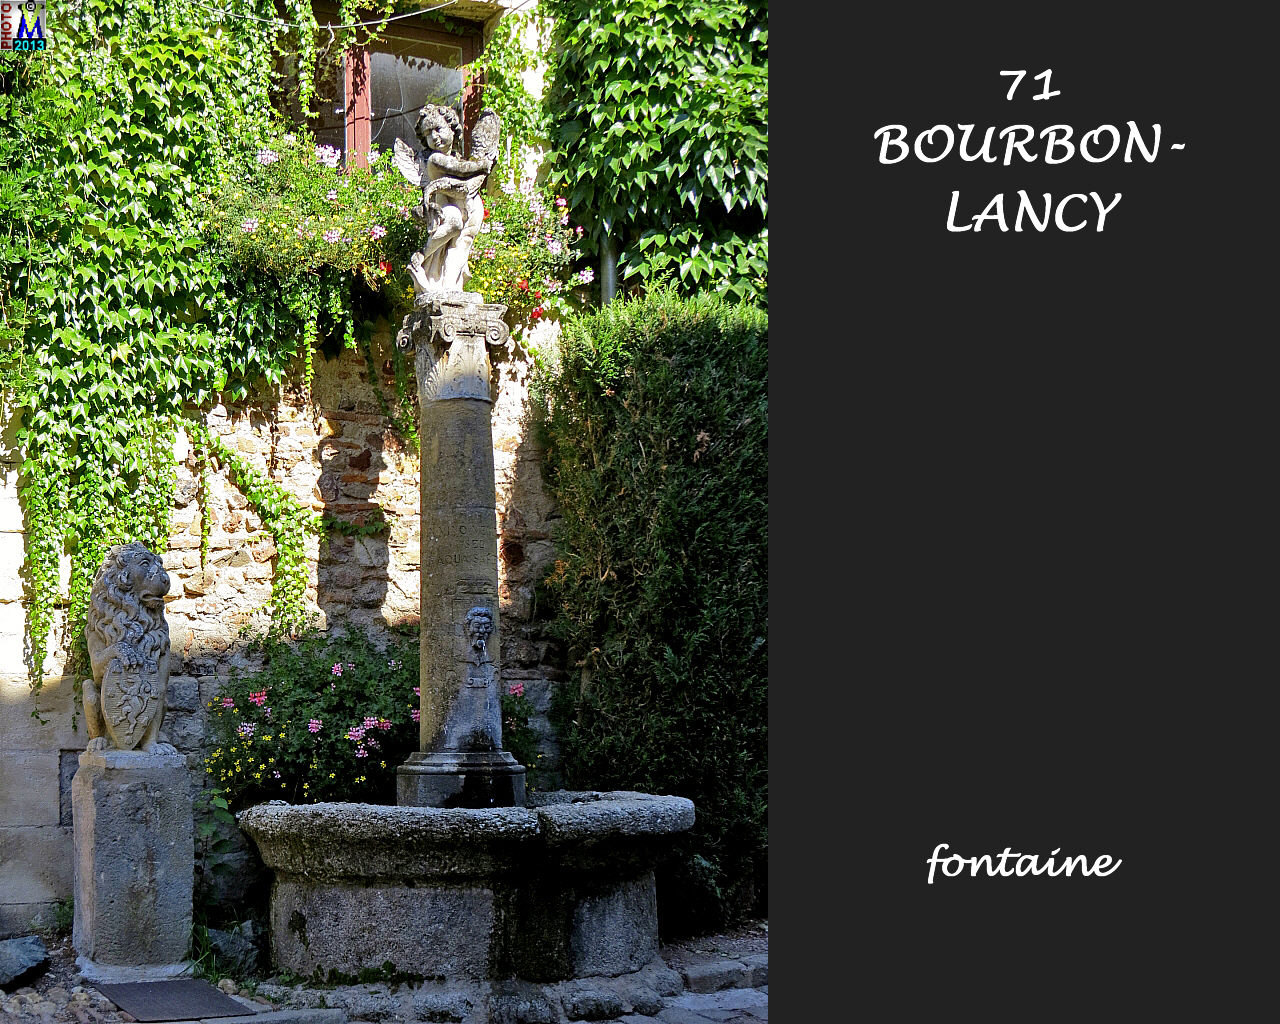 71BOURBON-LANCY_fontaine_100.jpg